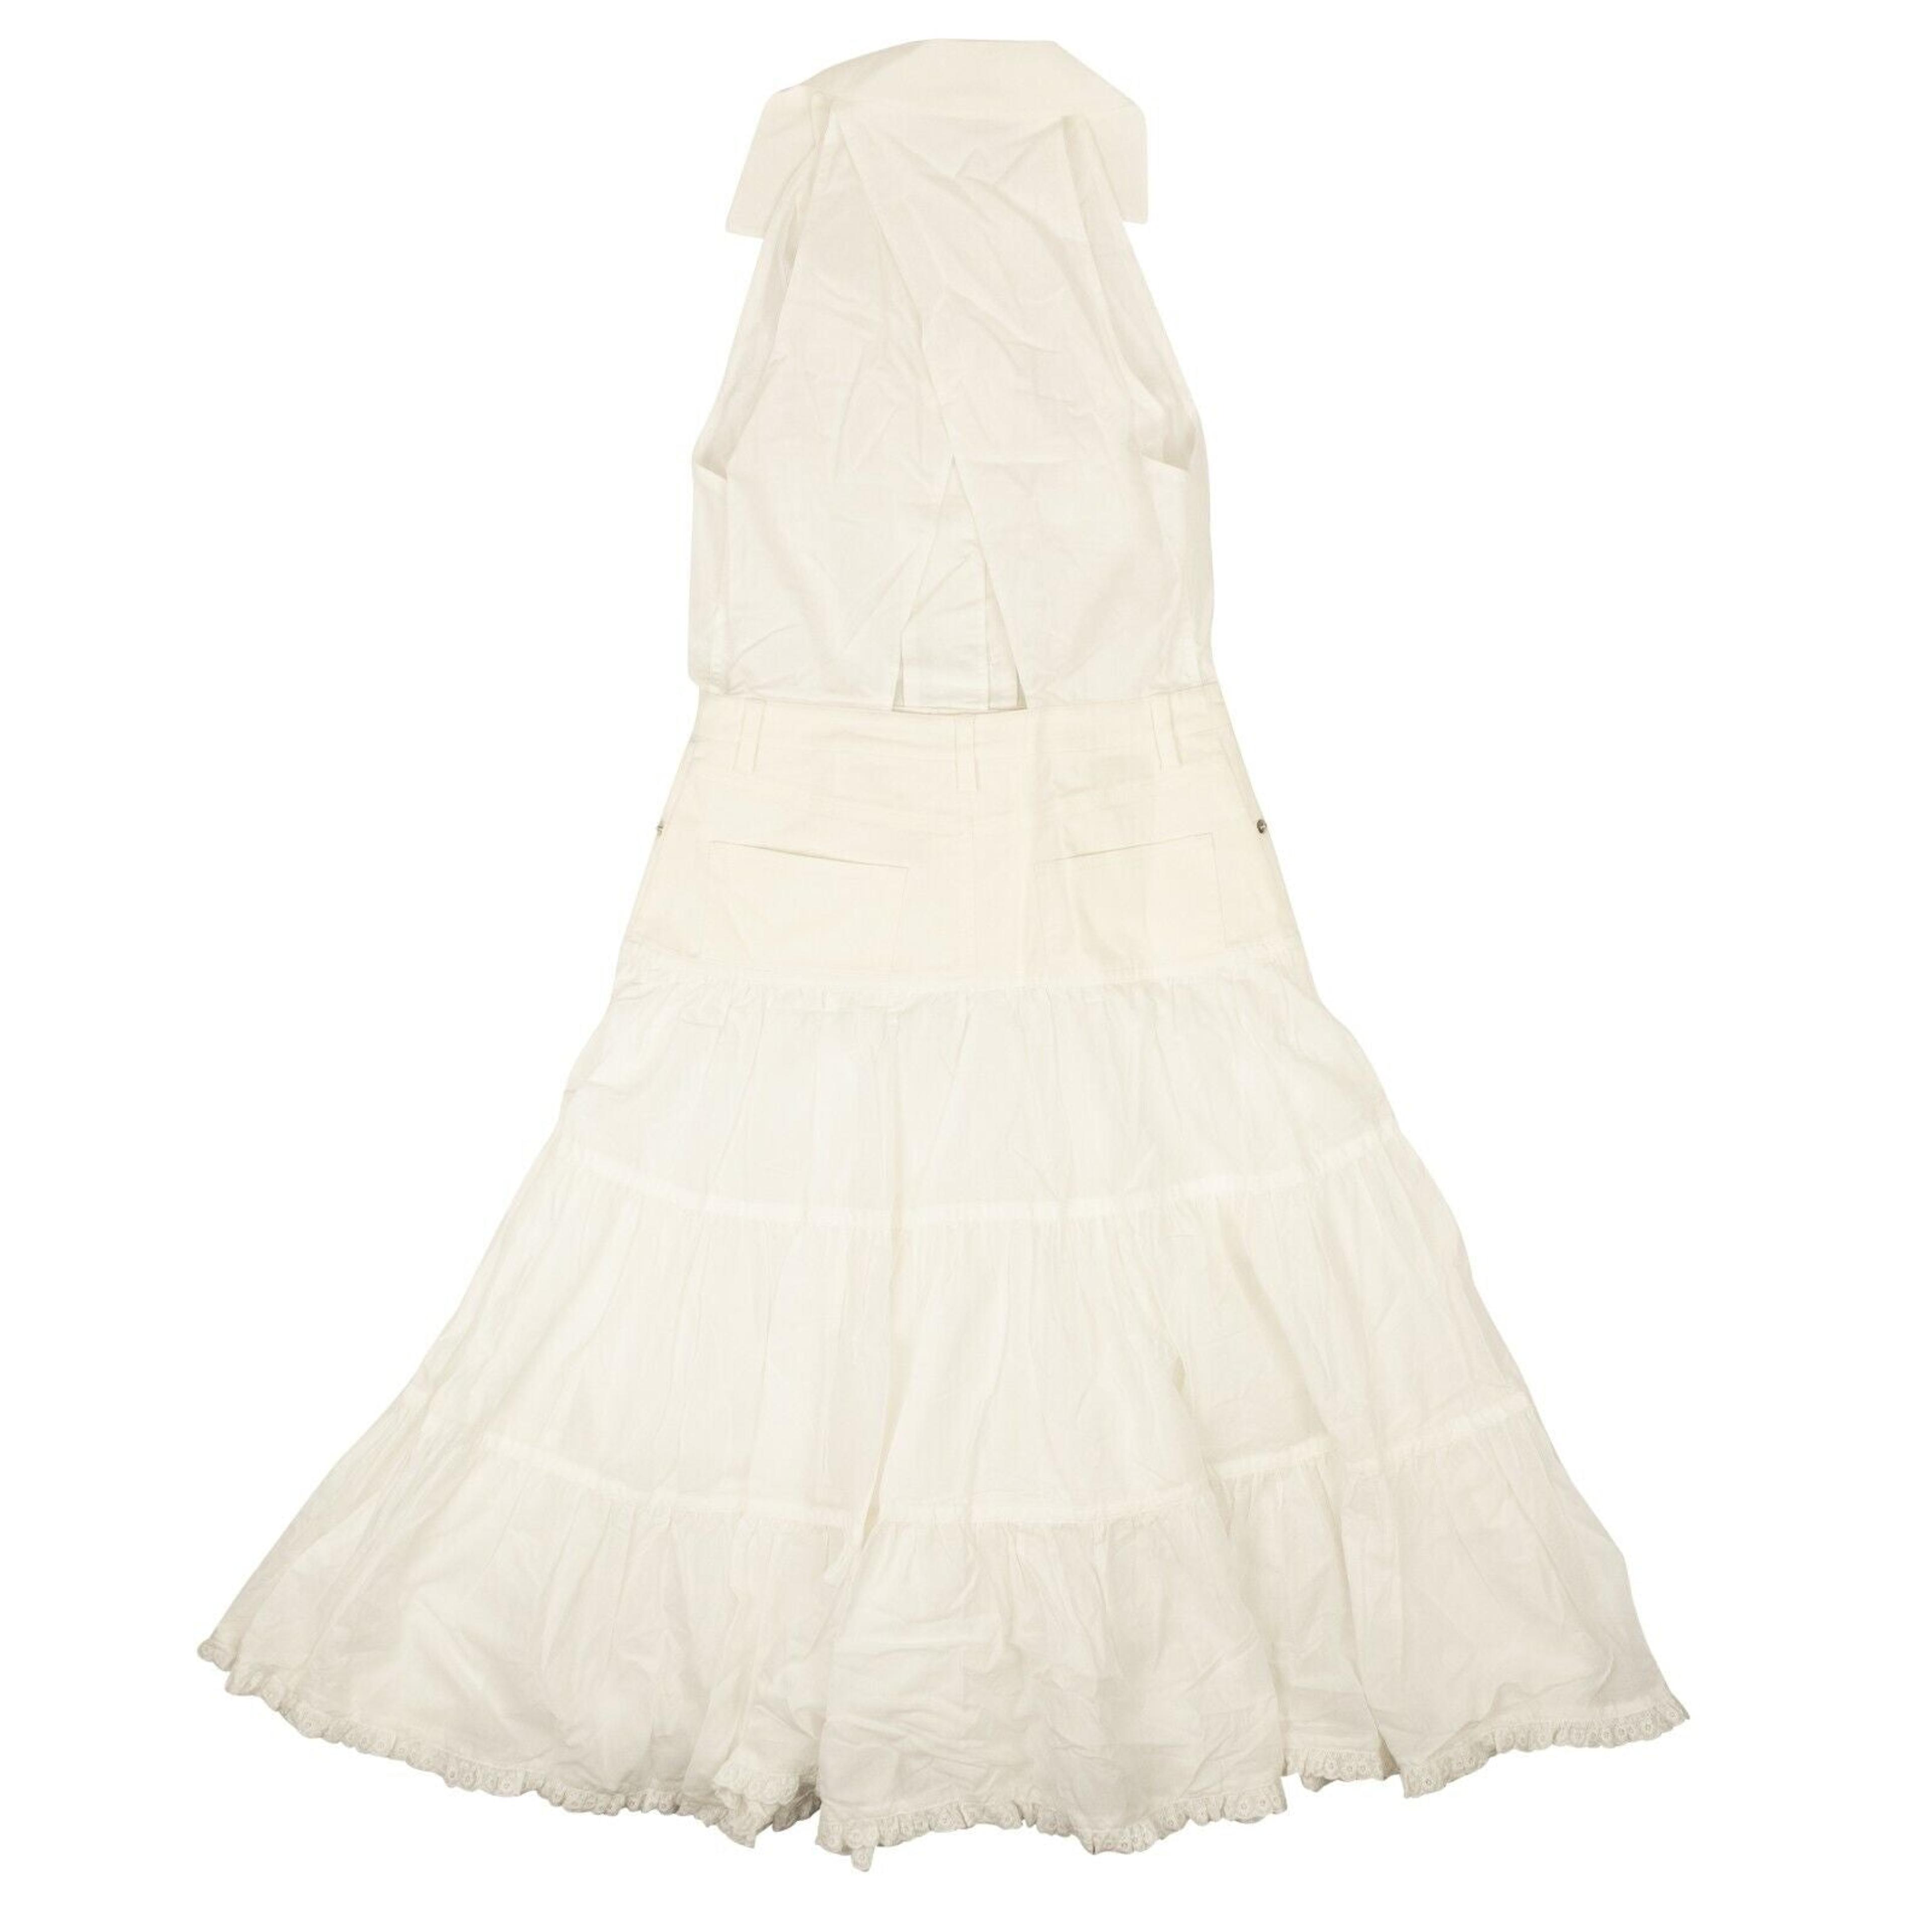 Alternate View 2 of White Cotton Tiered Ruffle Dress